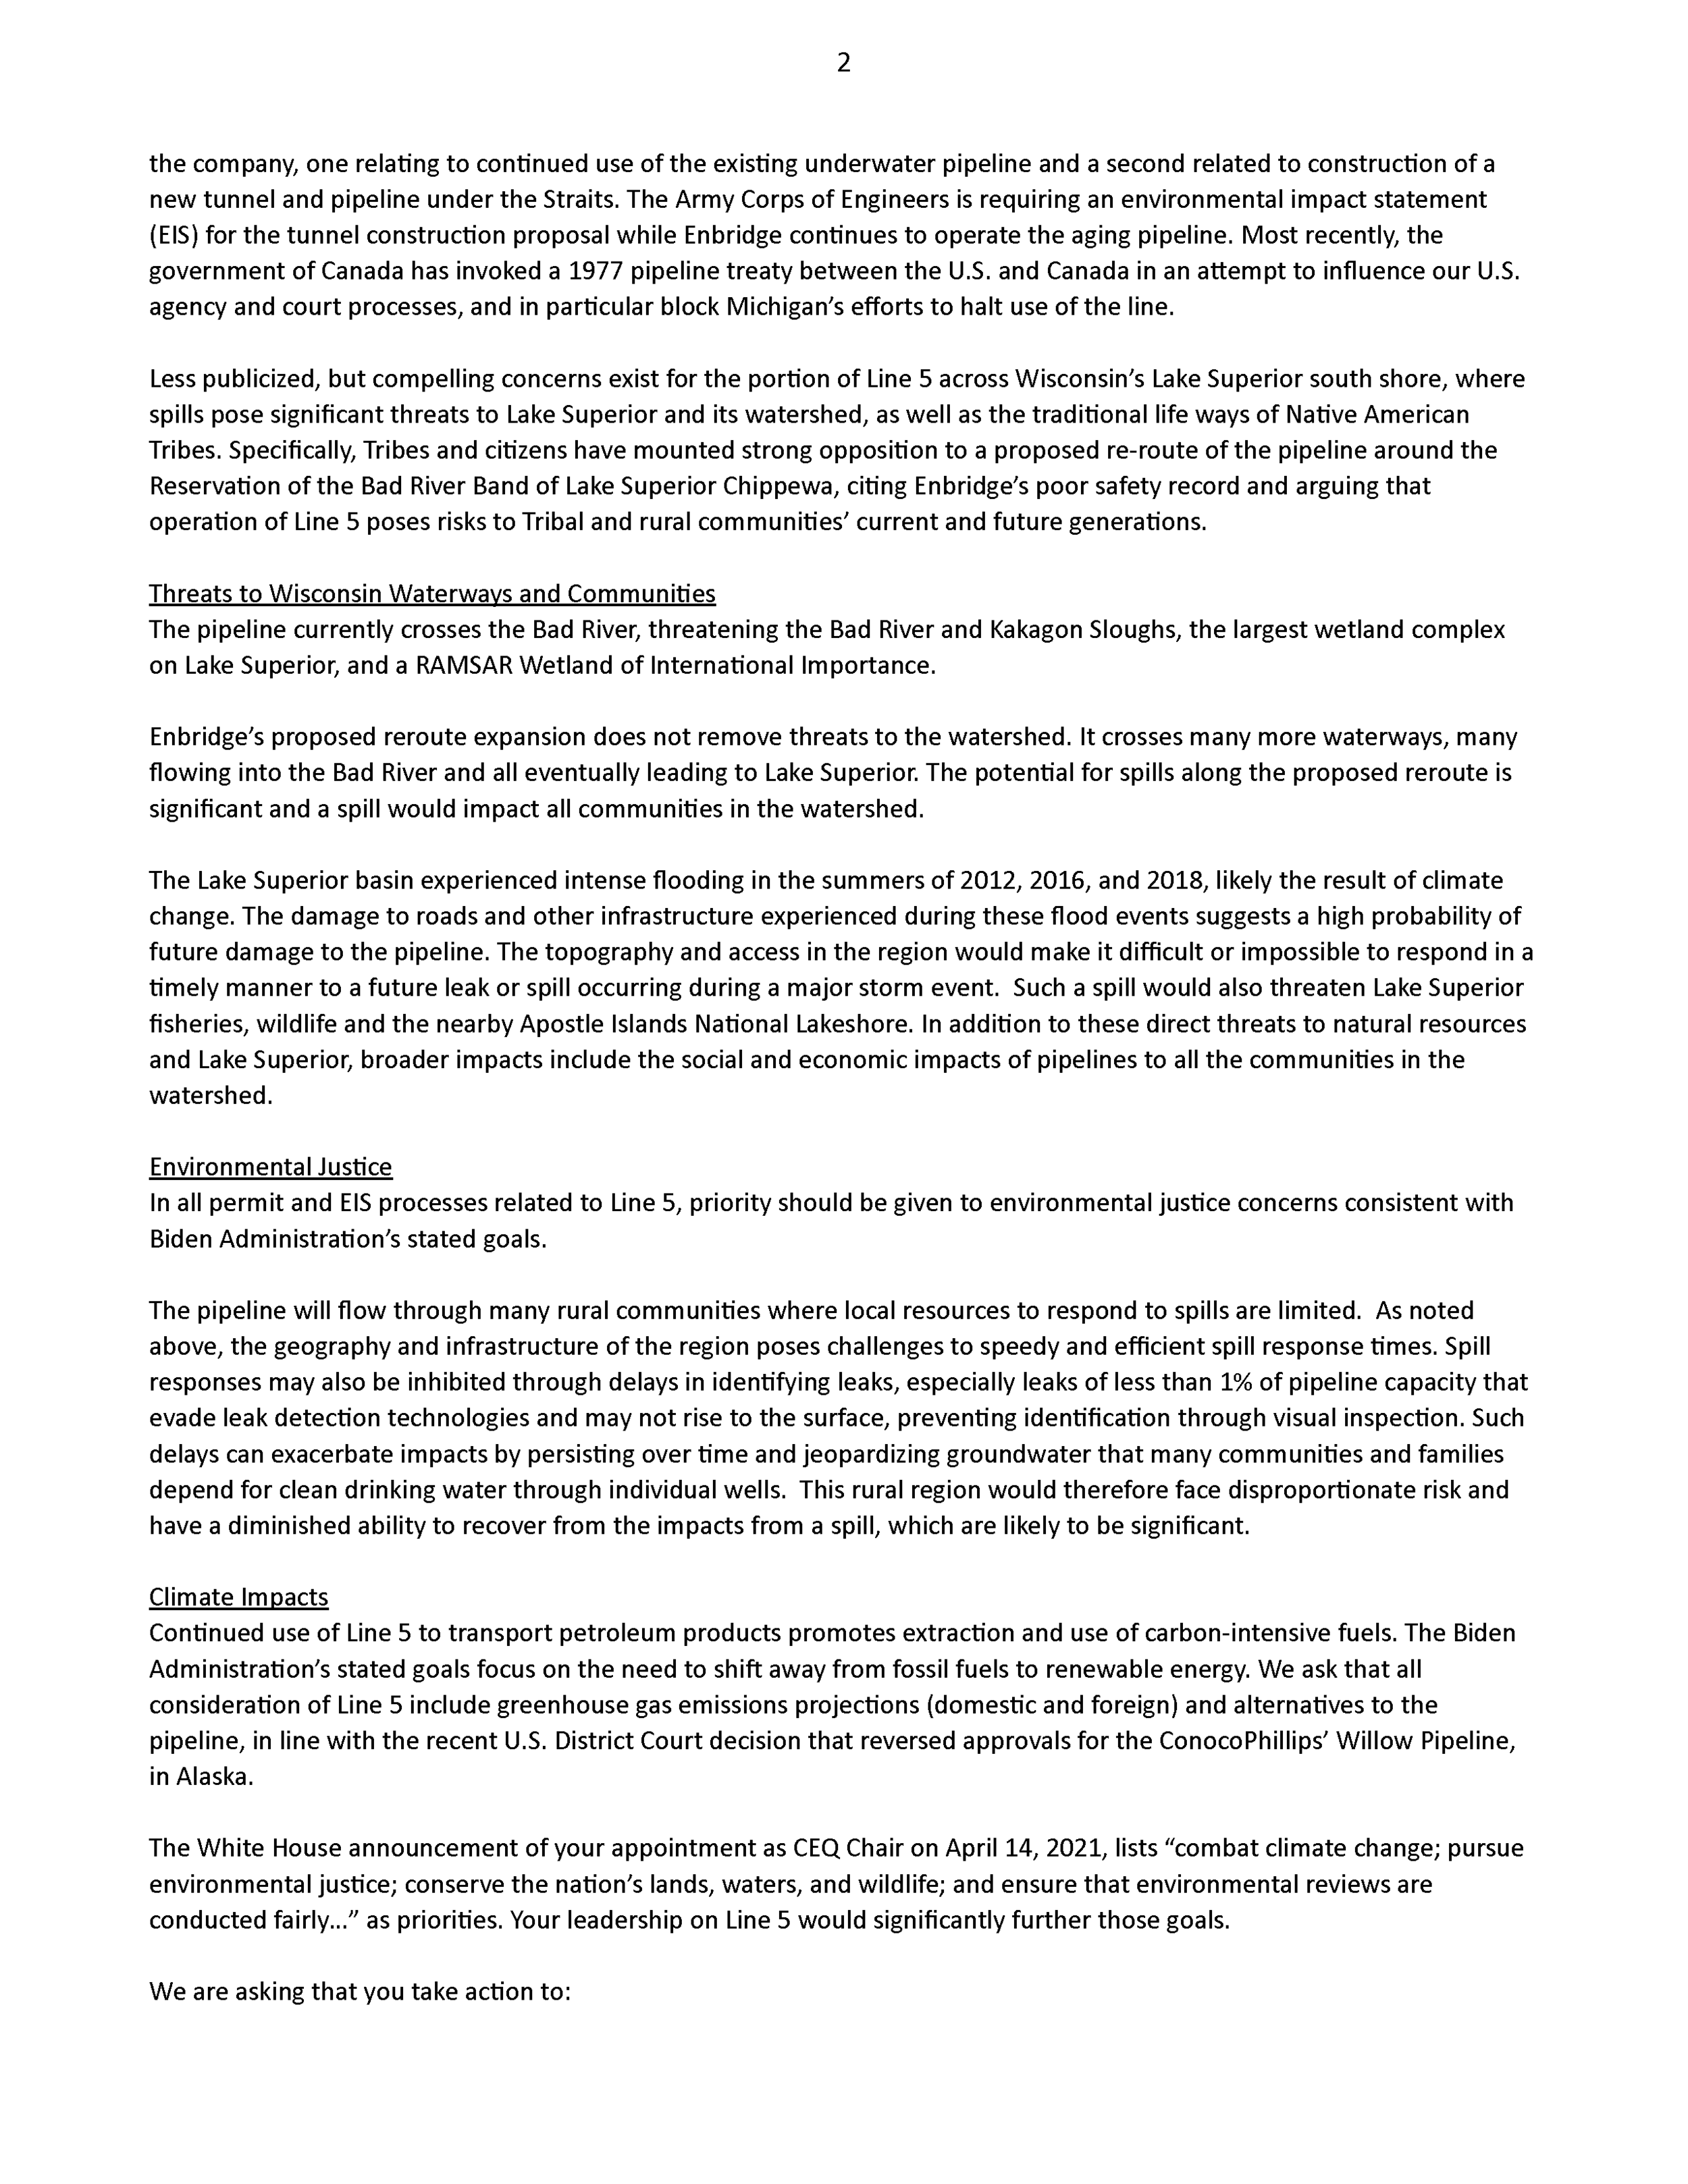 CEQ final letterhead 11-11-2021_Page_2.png